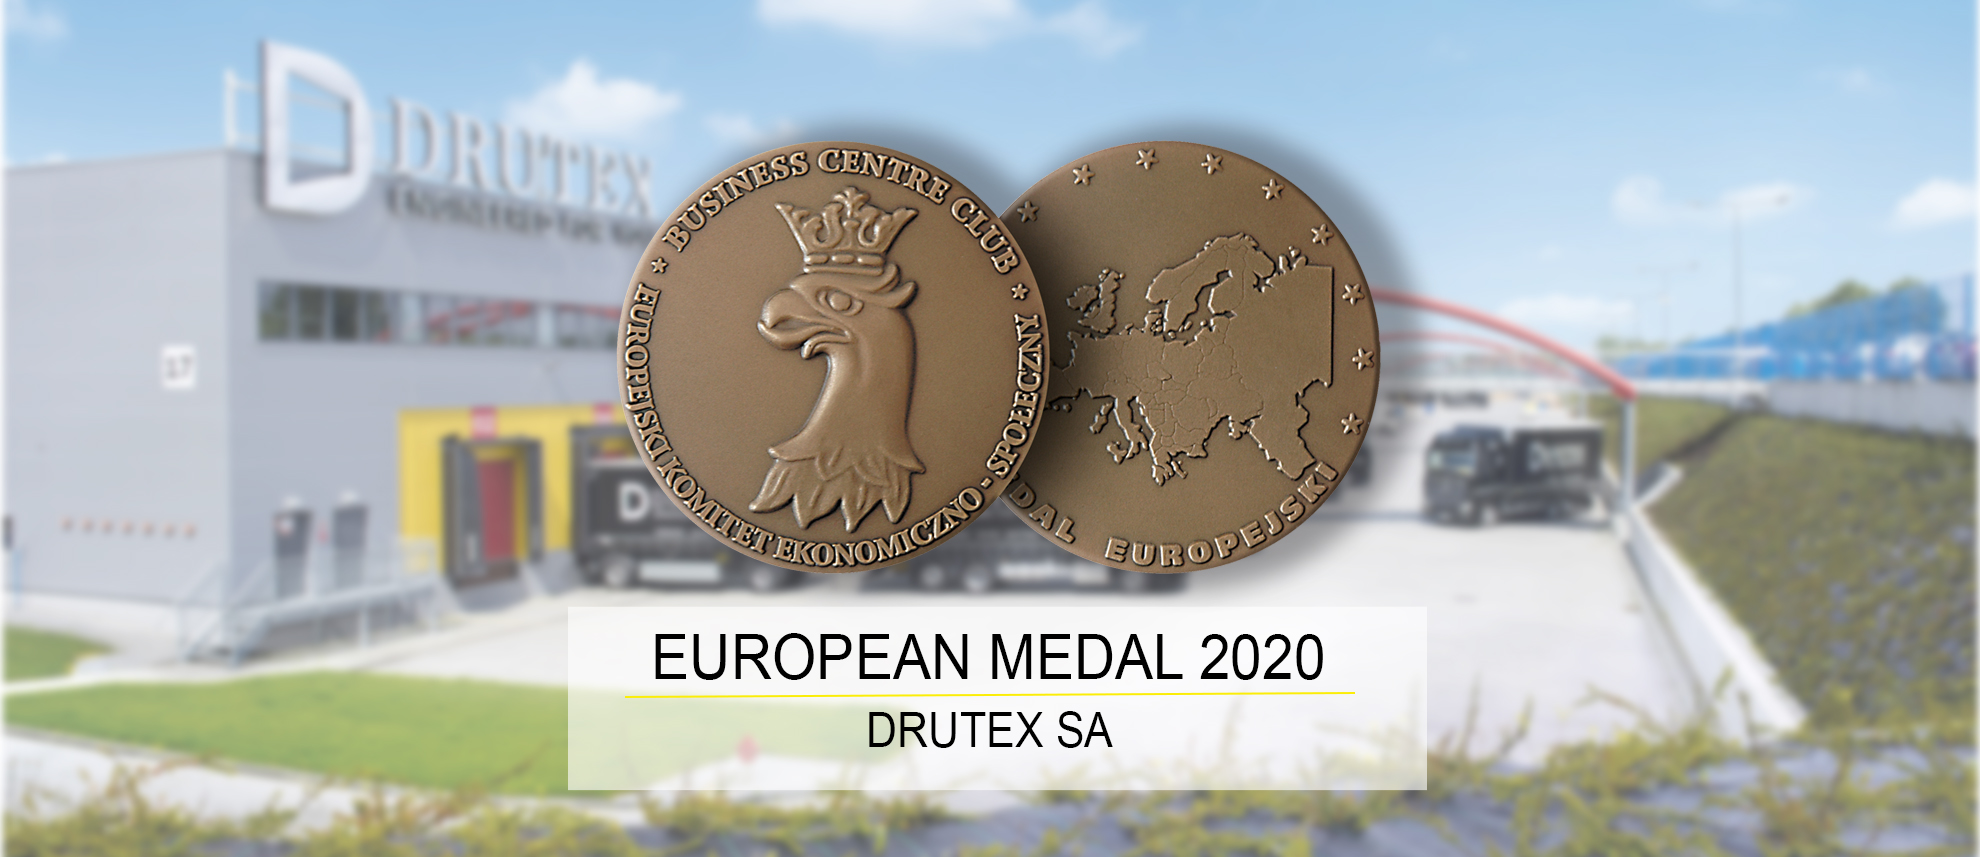 Drutex z medalem europejskim